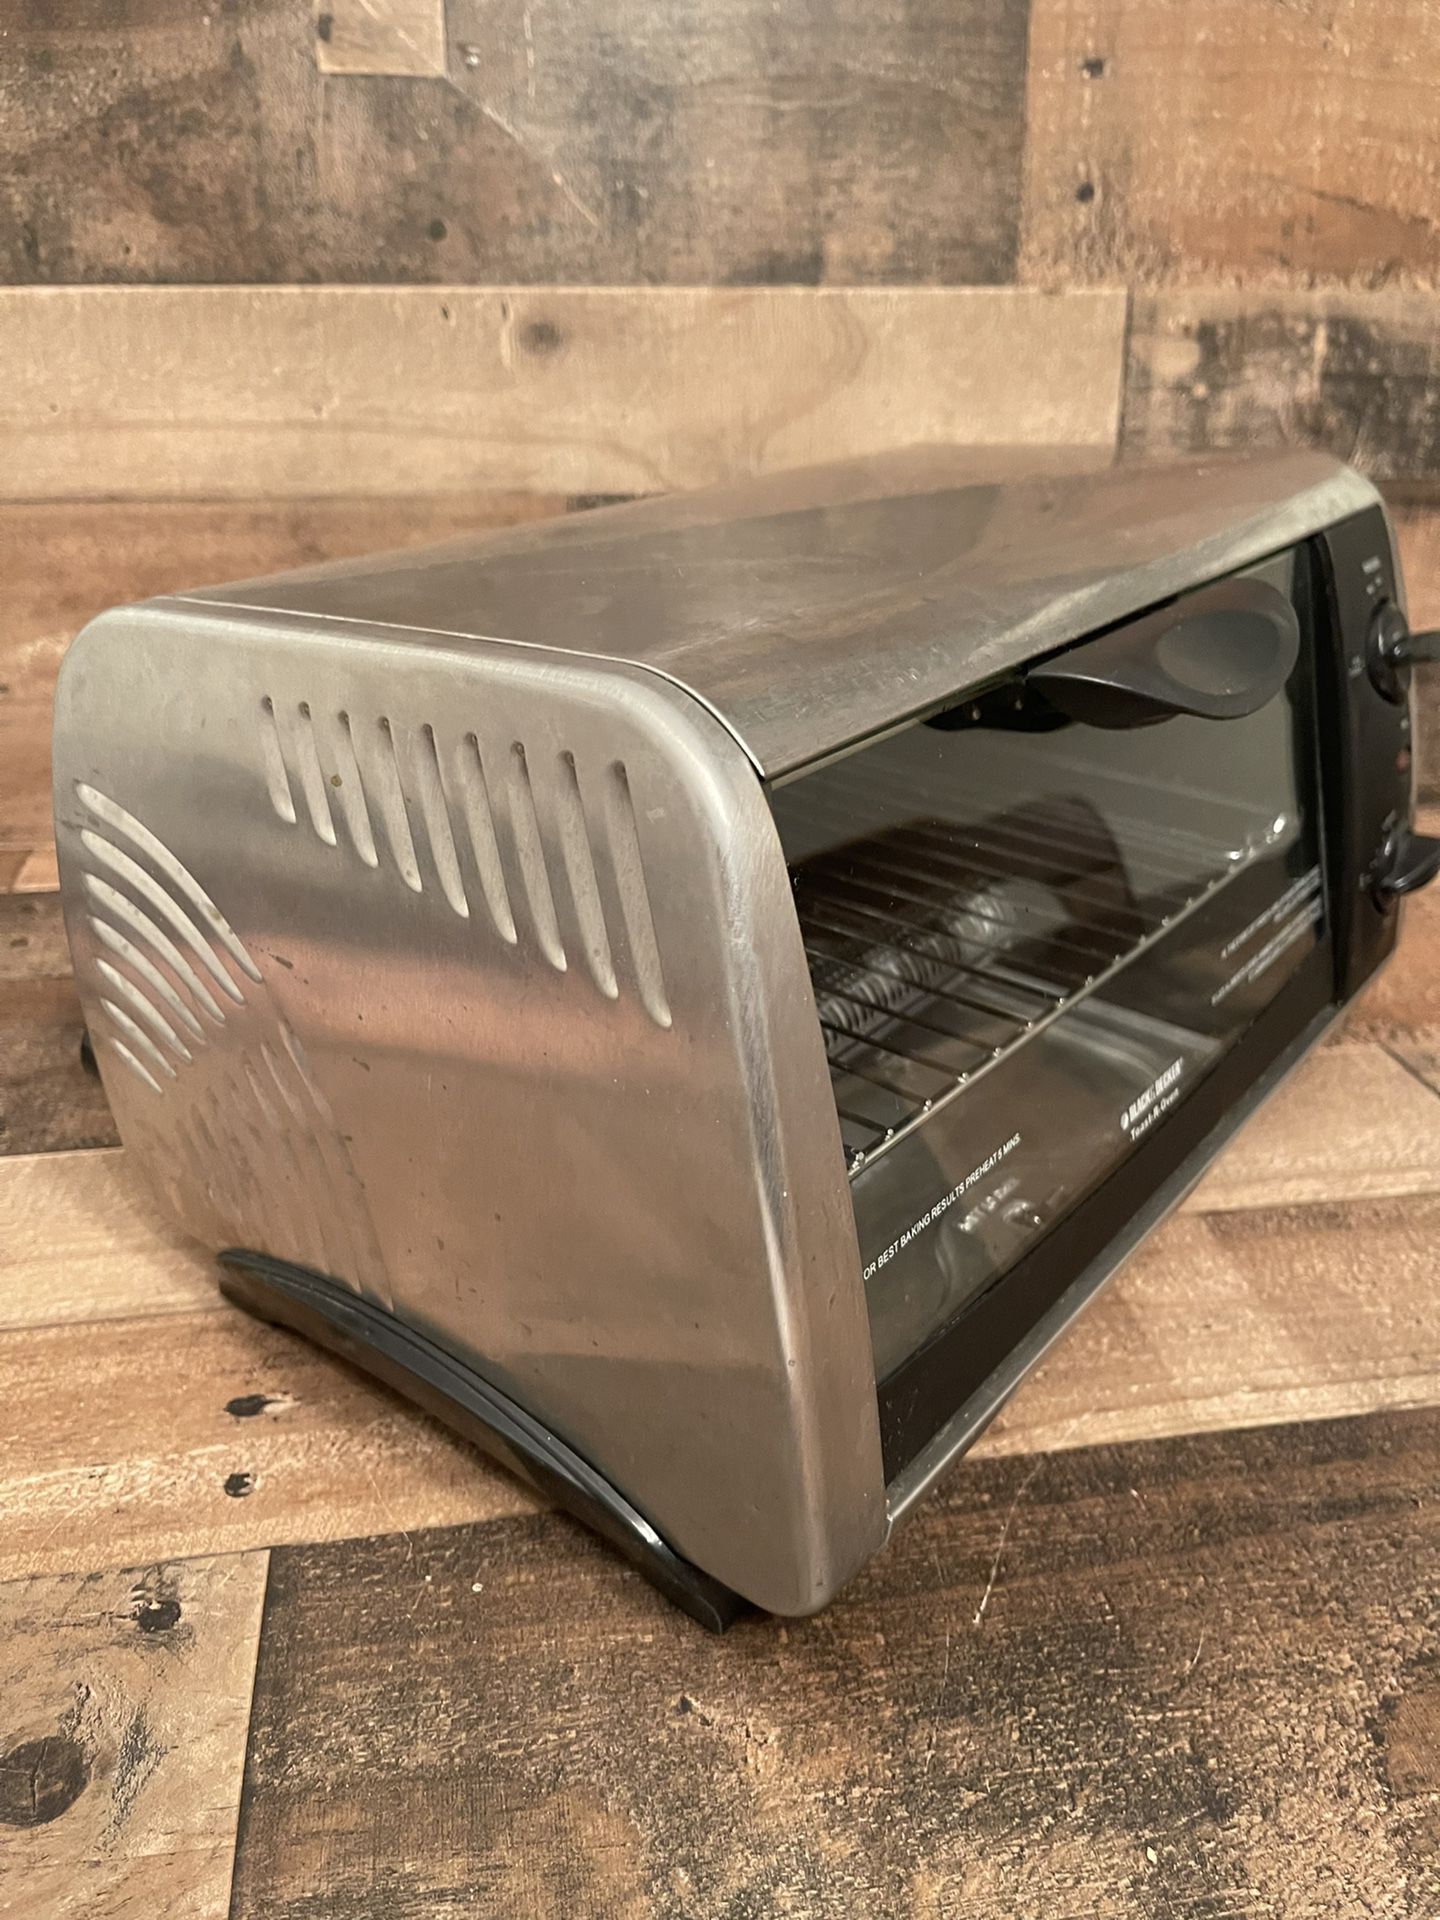 Black & Decker Toaster Oven for Sale in Tucson, AZ - OfferUp